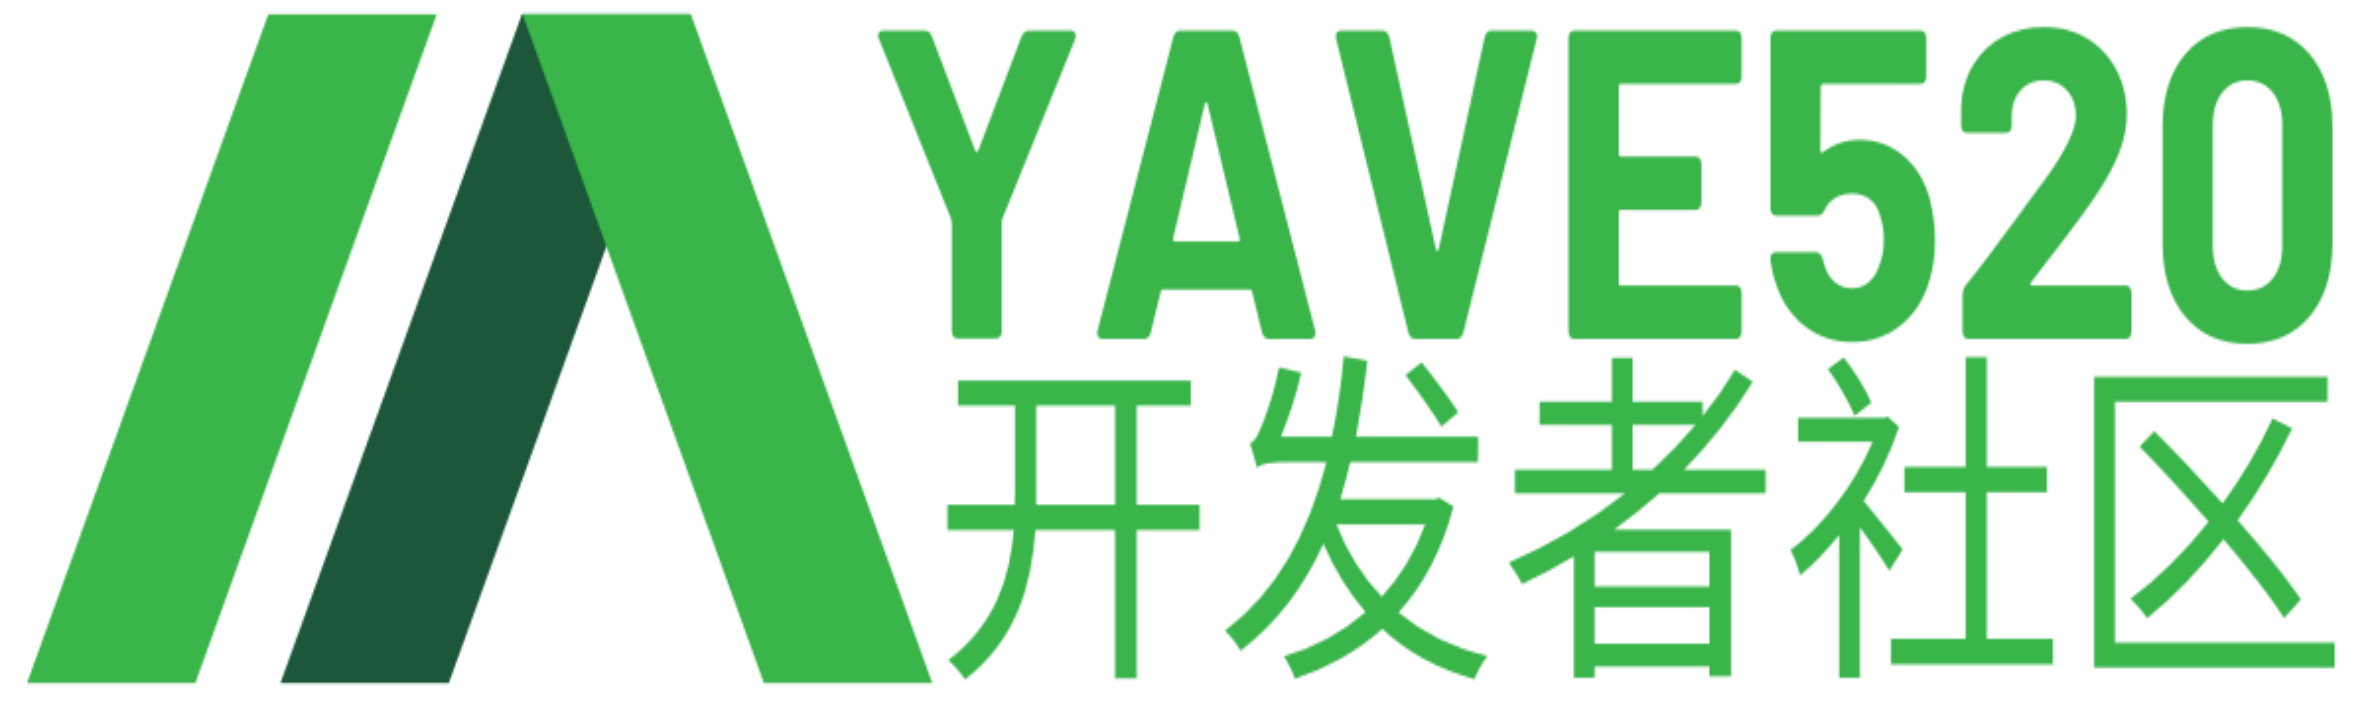 Python-Yave520-专业开发者社区